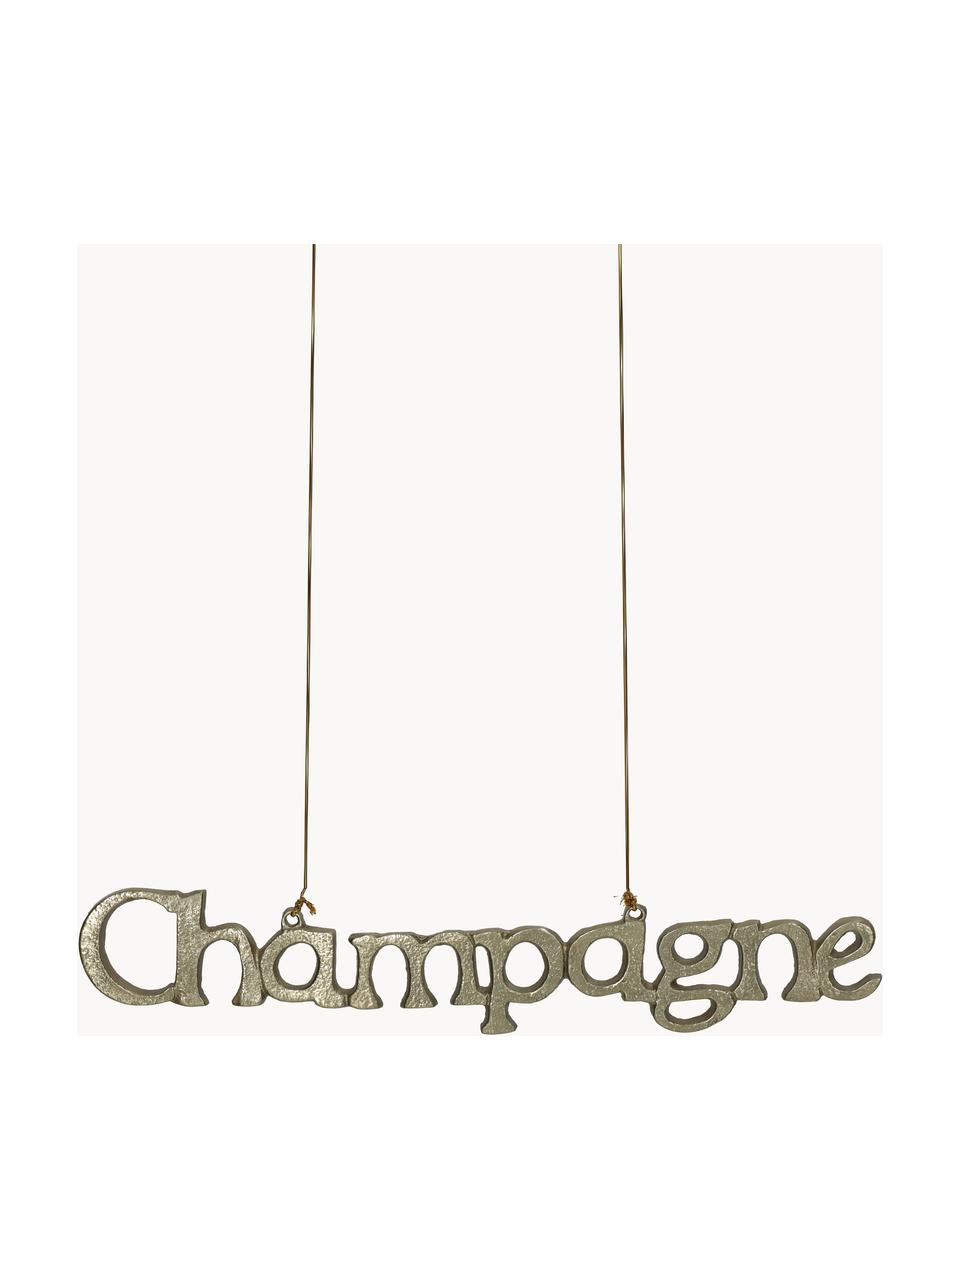 Adorno navideño Champagne, Metal recubierto, Dorado, An 27 x Al 5 cm